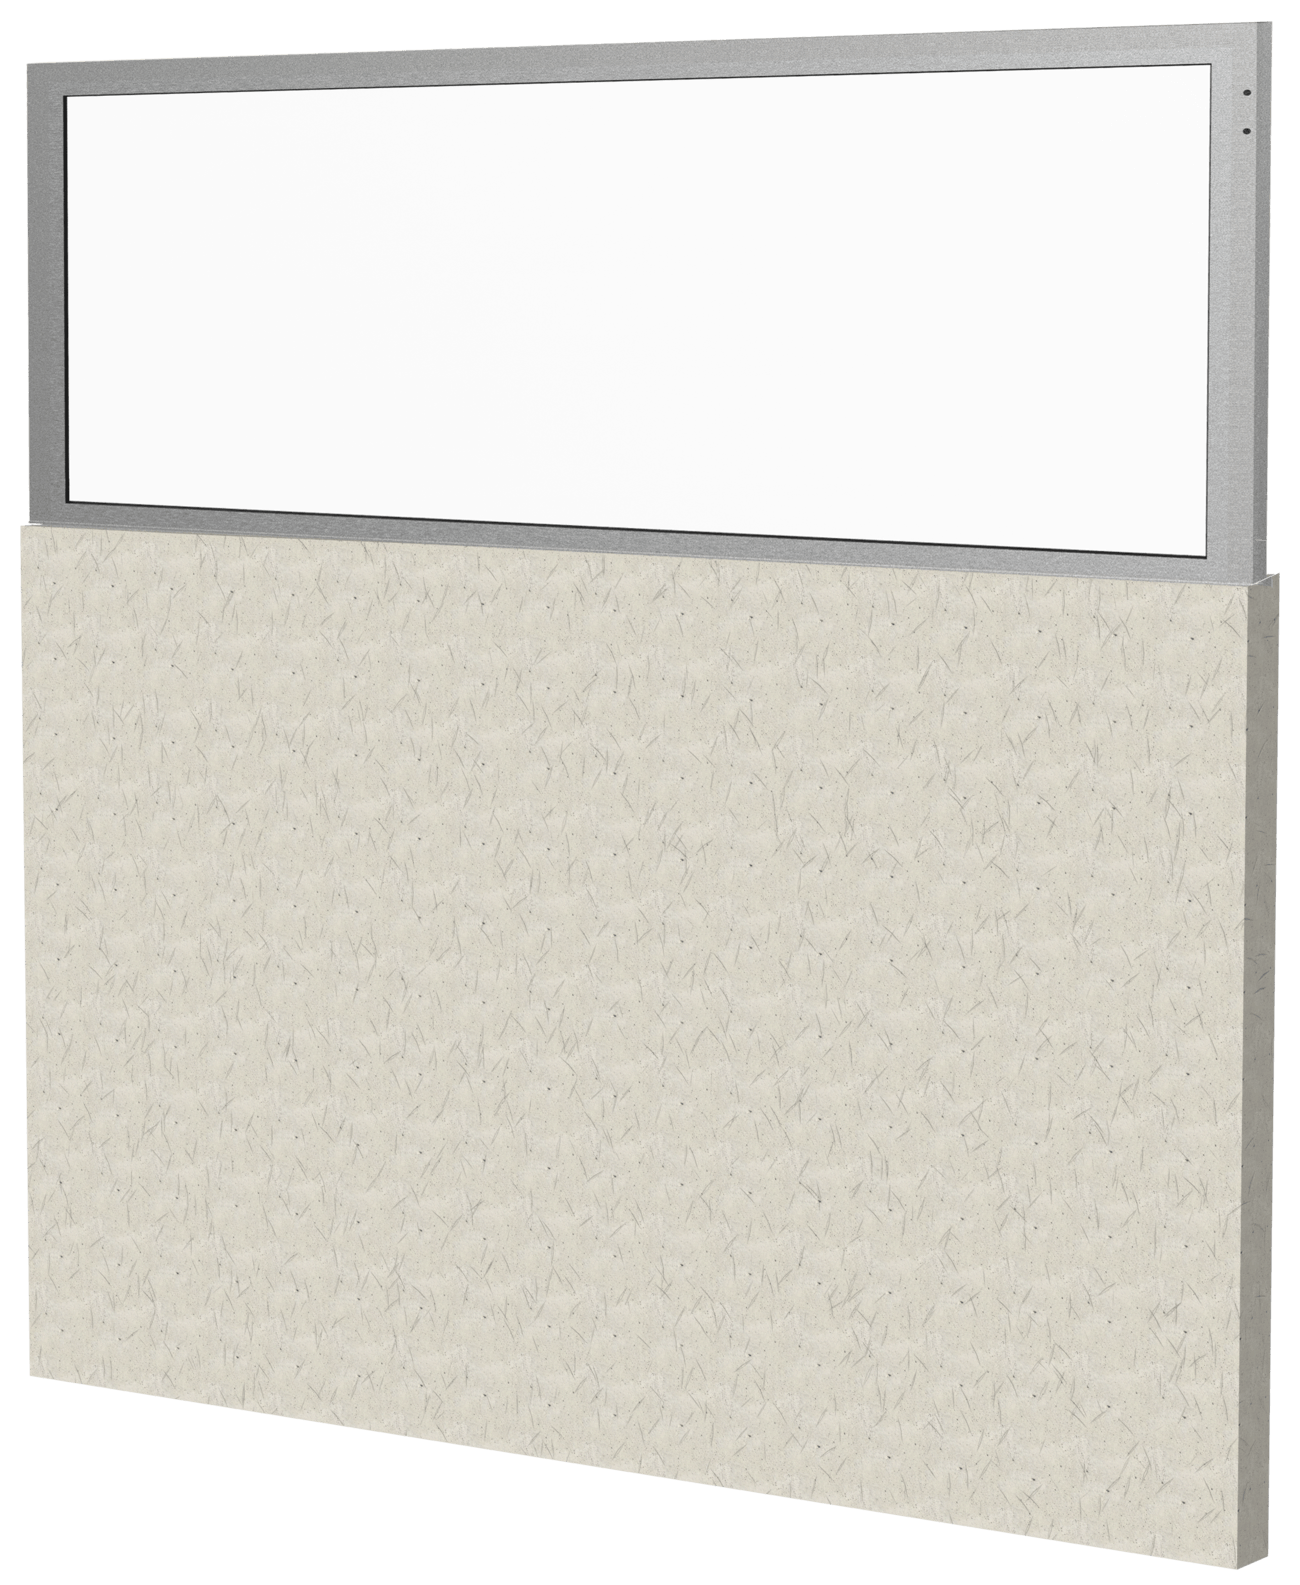 24" Glass Flag Panel for Cement Masonry Unit (CMU)